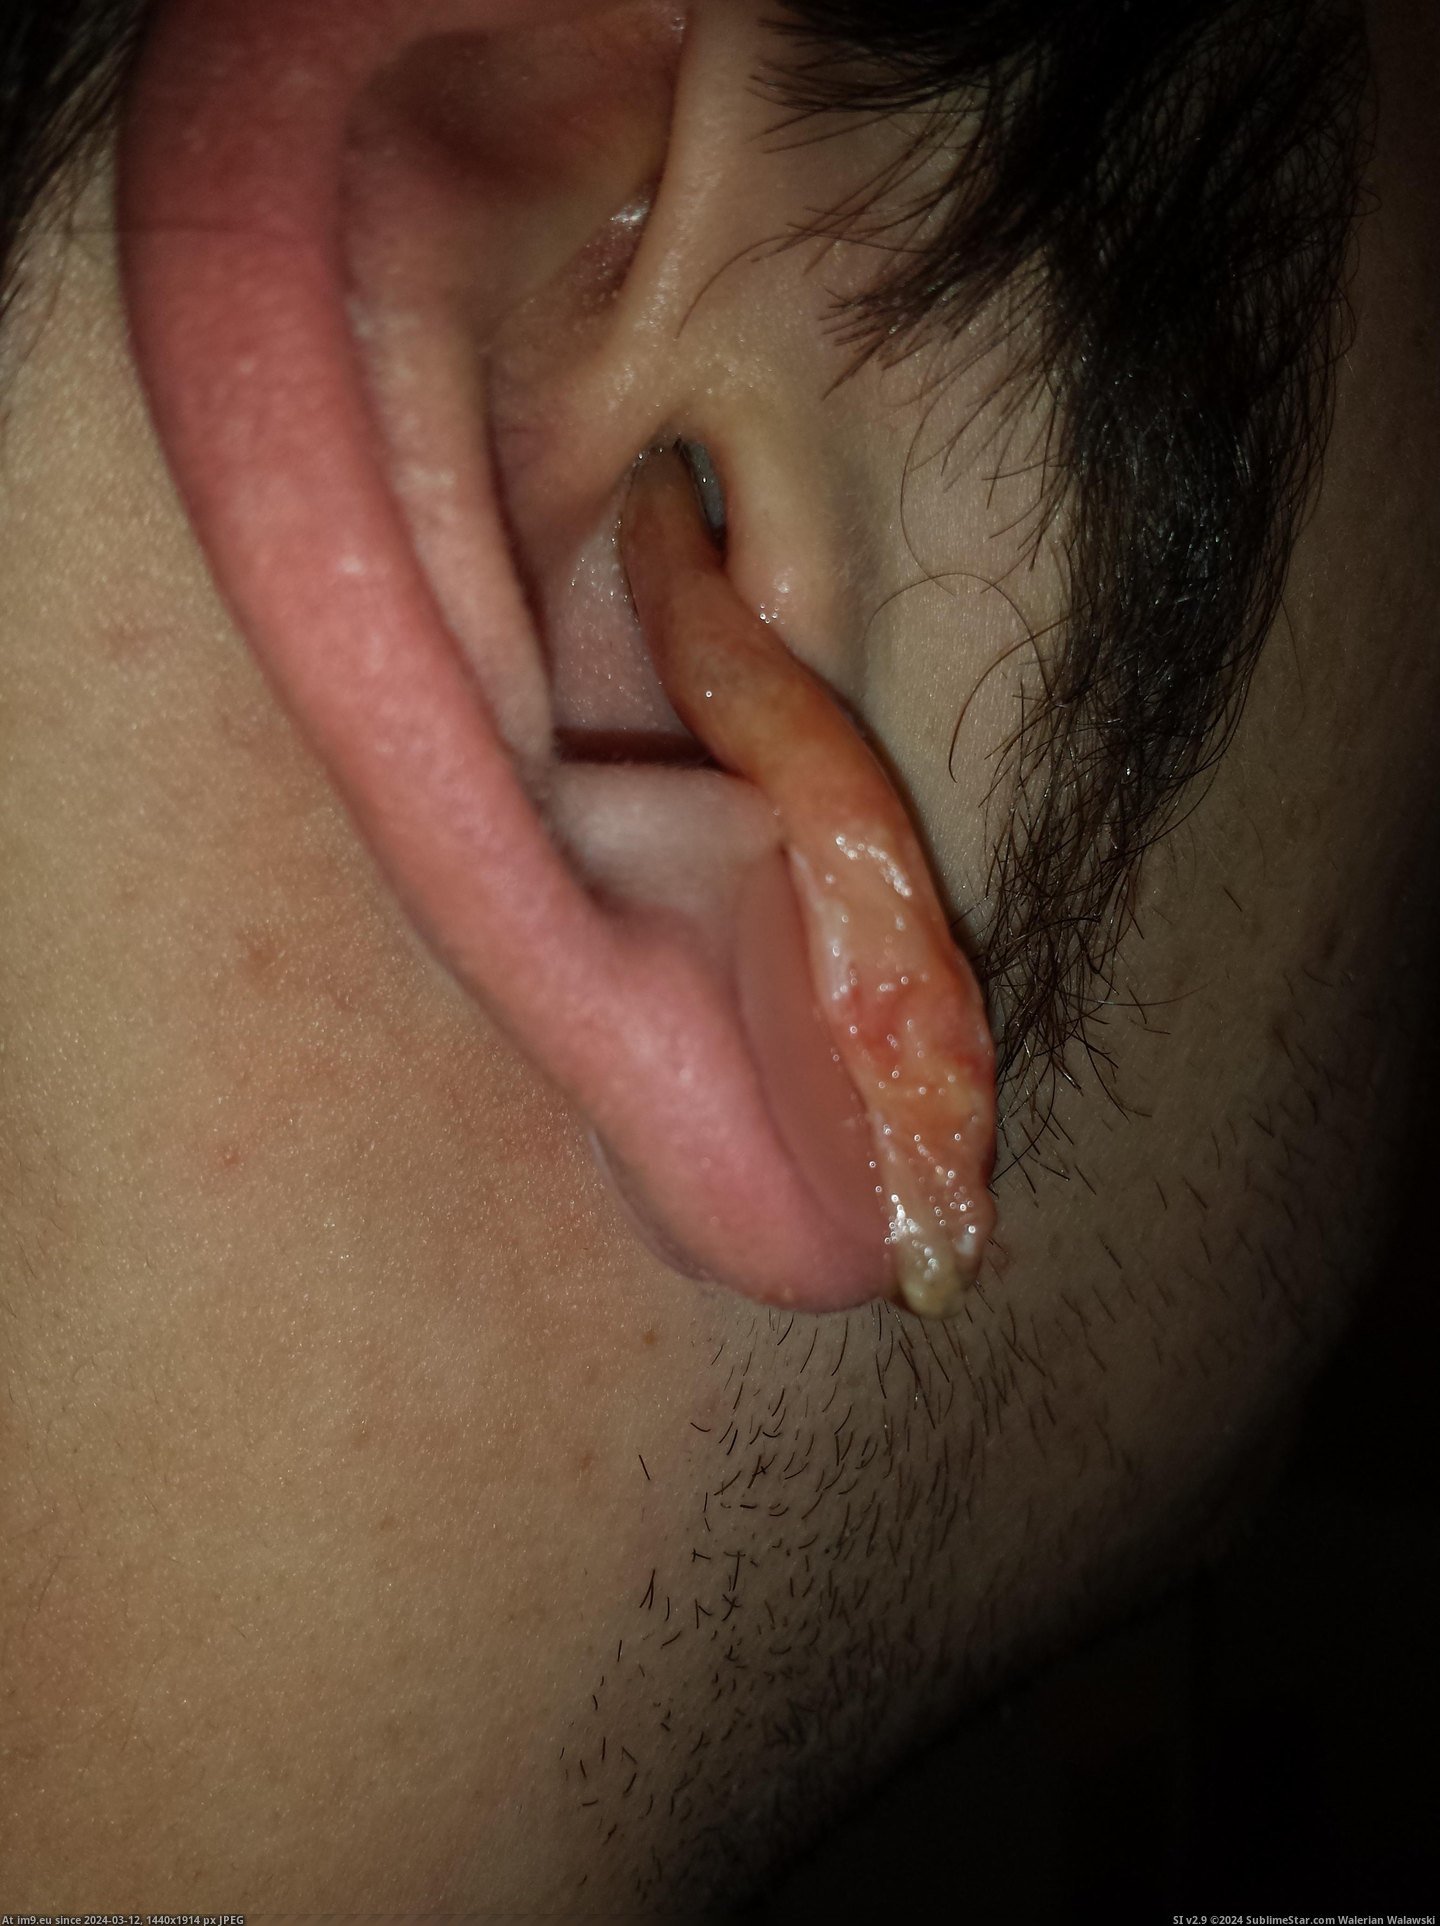 #Wtf #Ear #Infection #Crazy [Wtf] My crazy ear infection 2 Pic. (Bild von album My r/WTF favs))